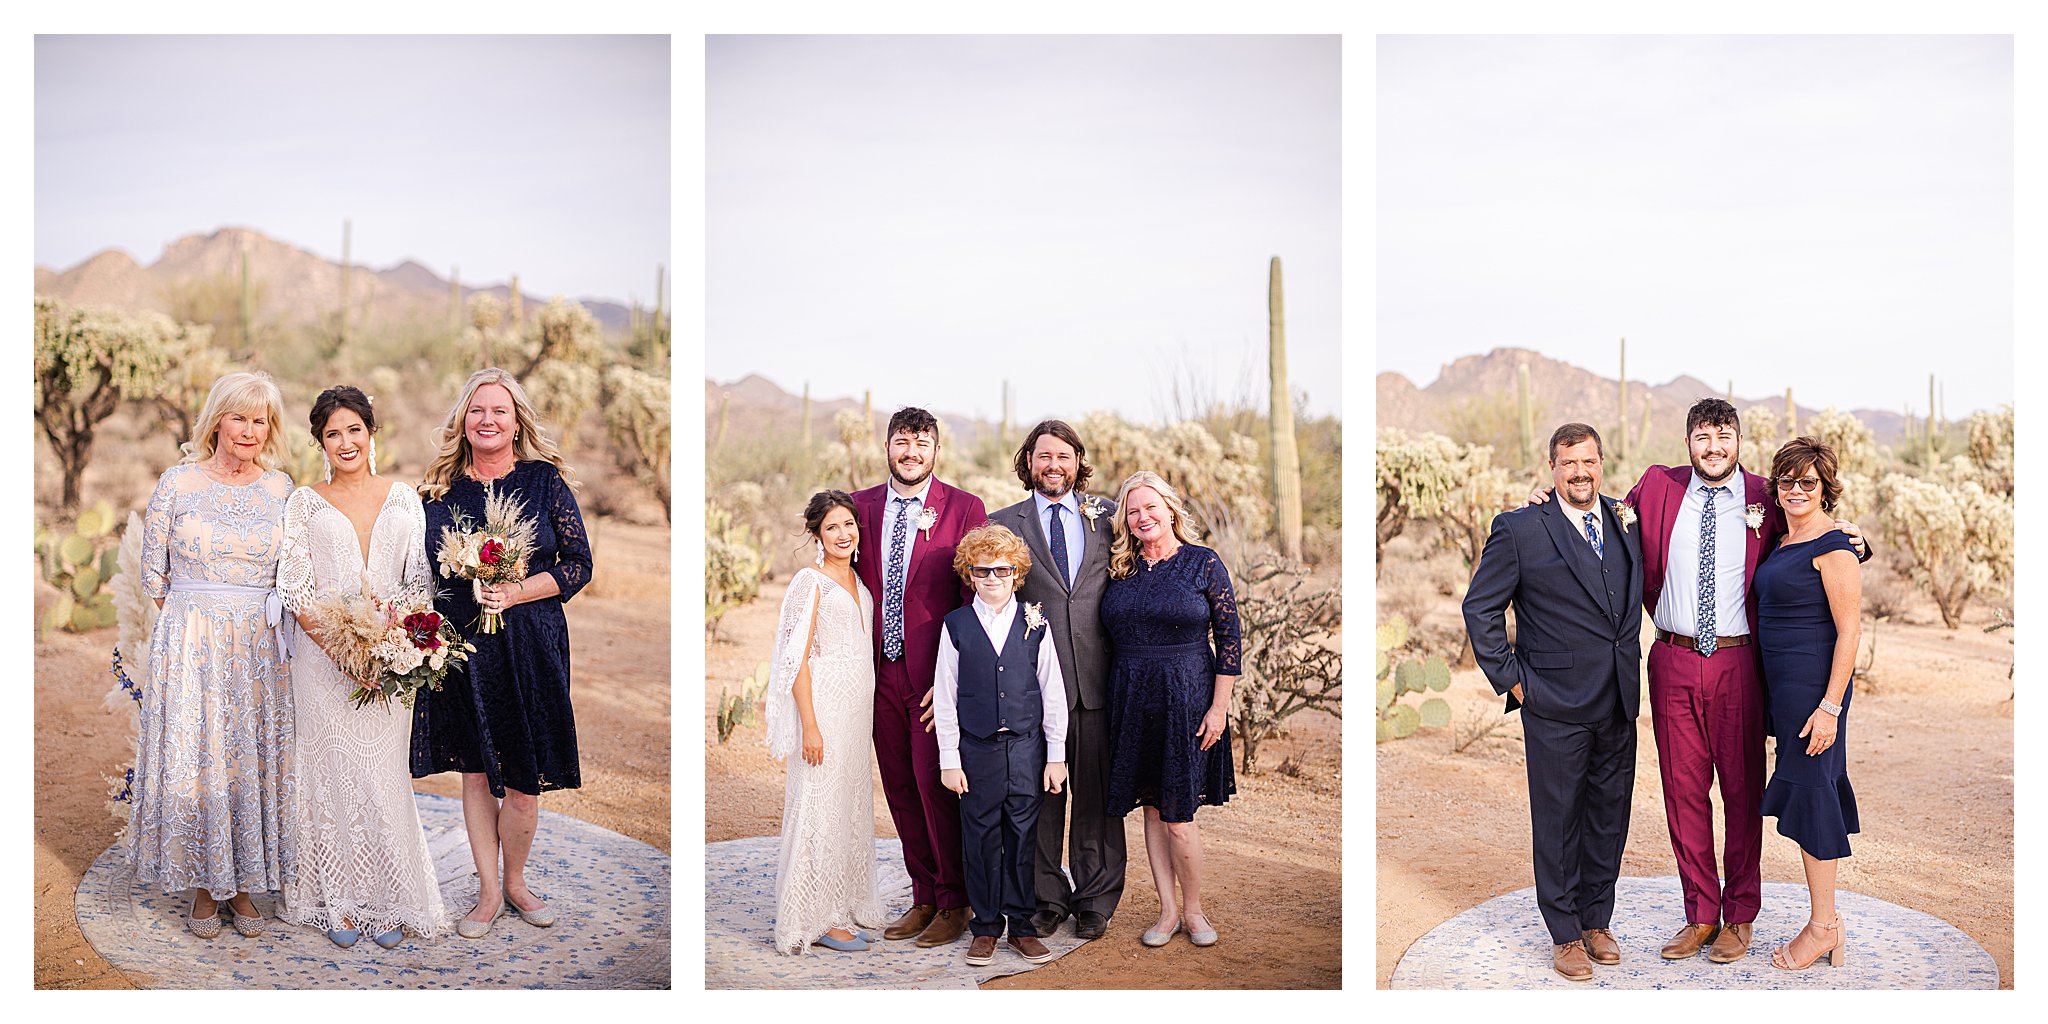 family photos at a wedding in the desert